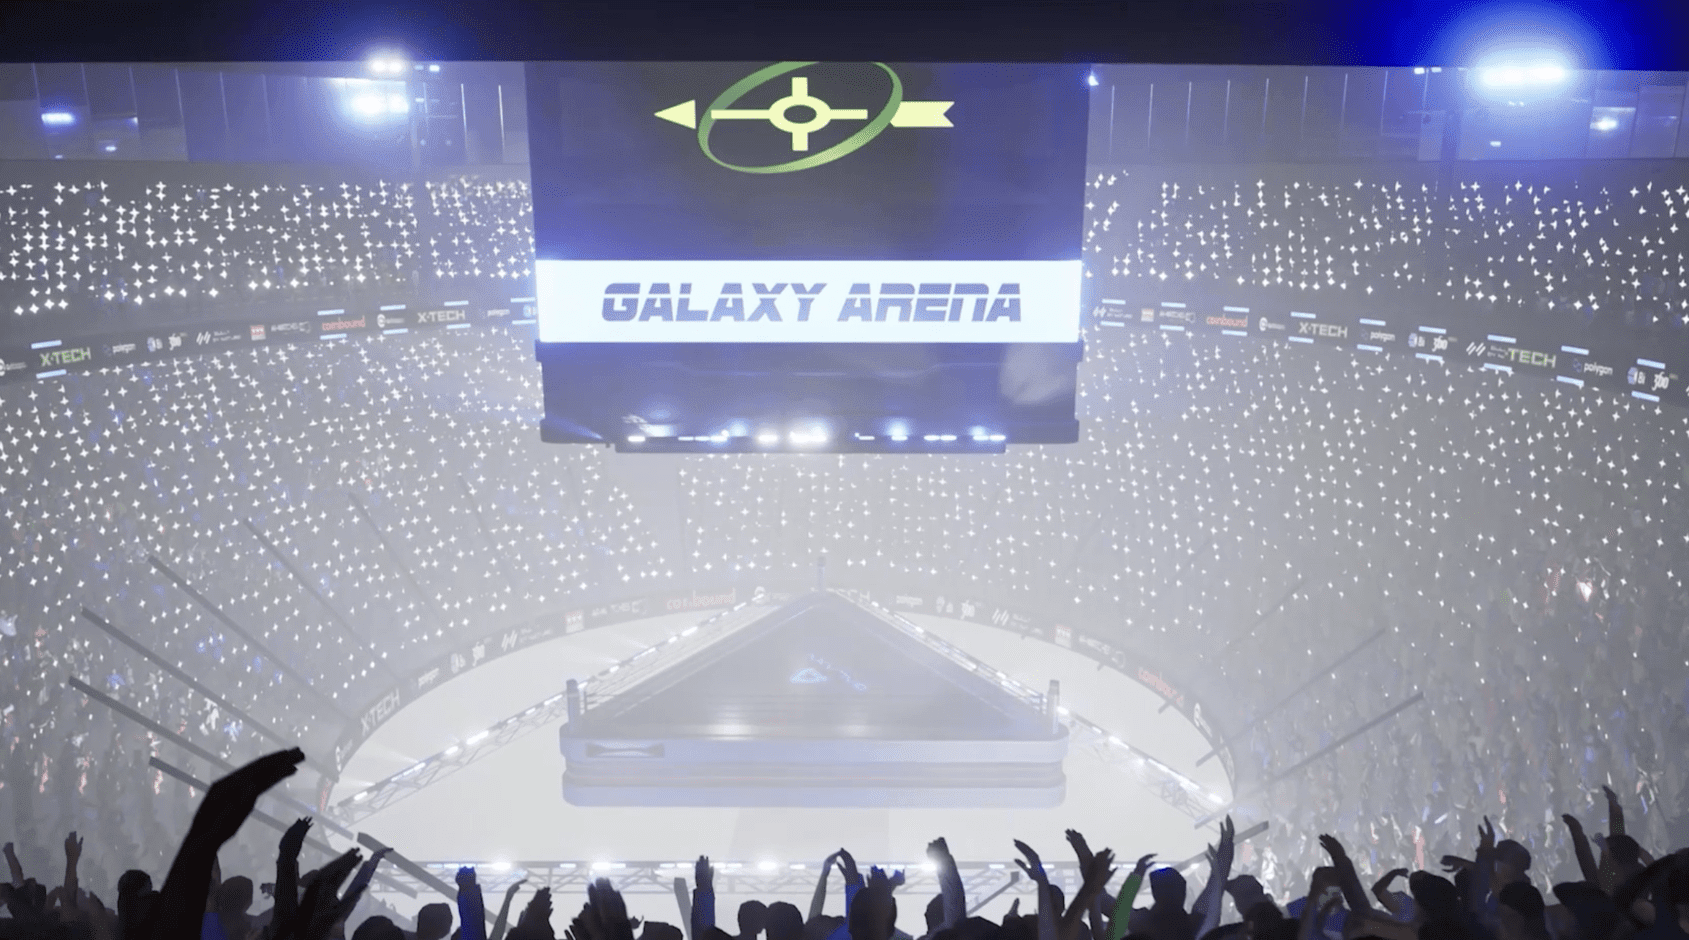 Galaxy Arena cover